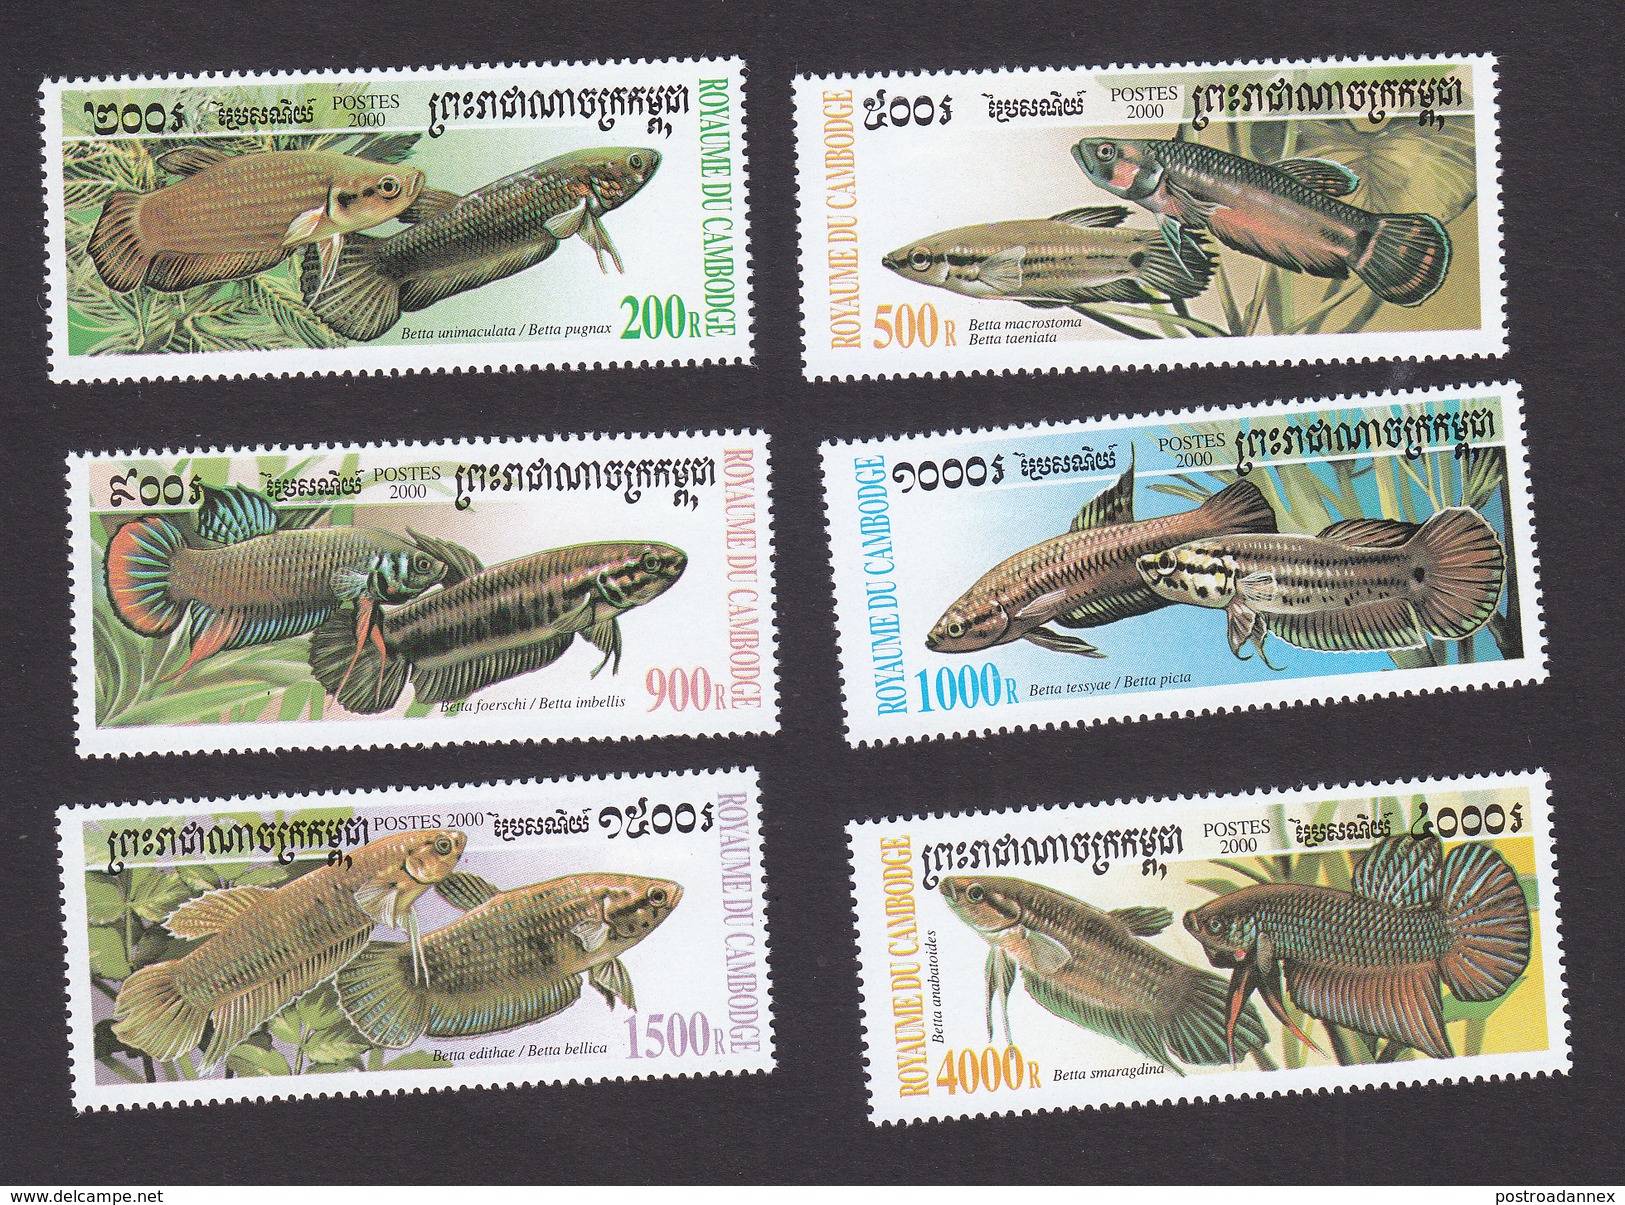 Cambodia, Scott #1945-1950, Mint Hinged, Fish, Issued 2000 - Cambodia